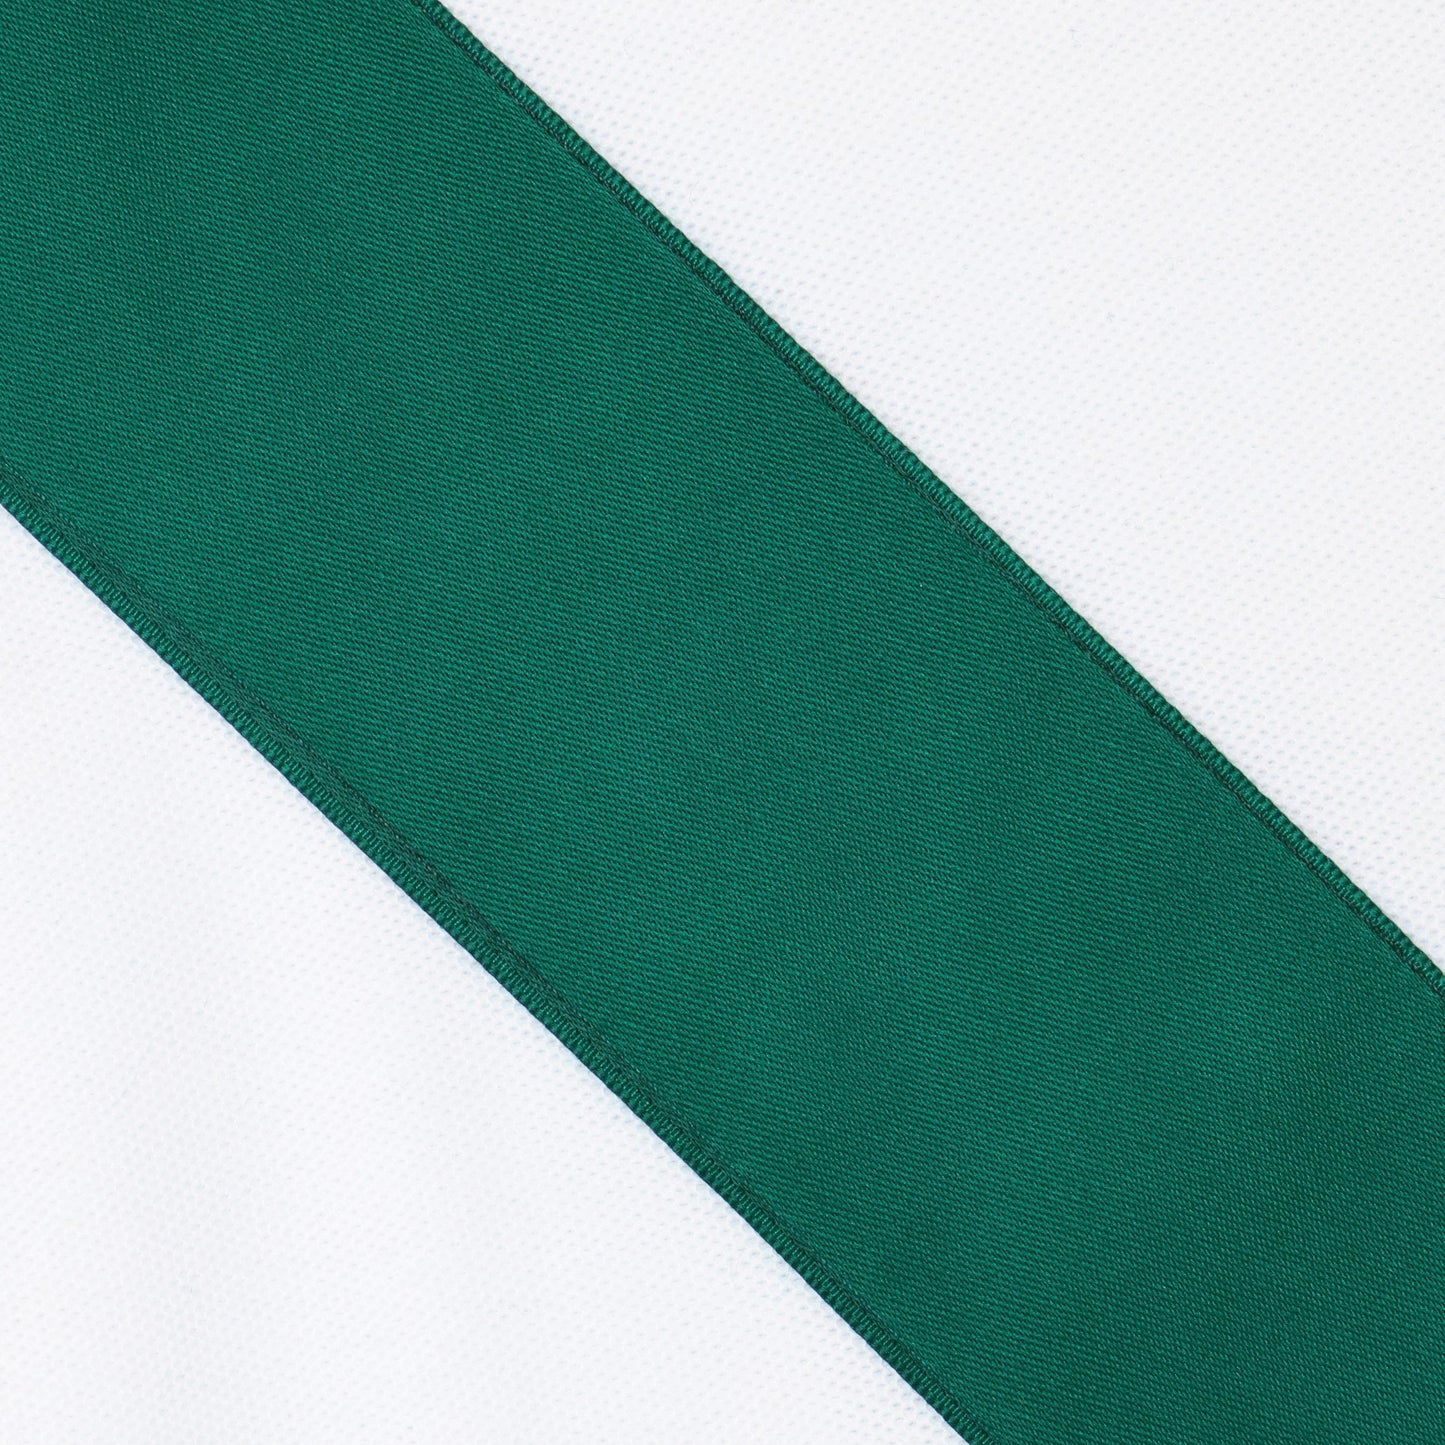 White Authentic Polo Shirt with Green Satin Stripe